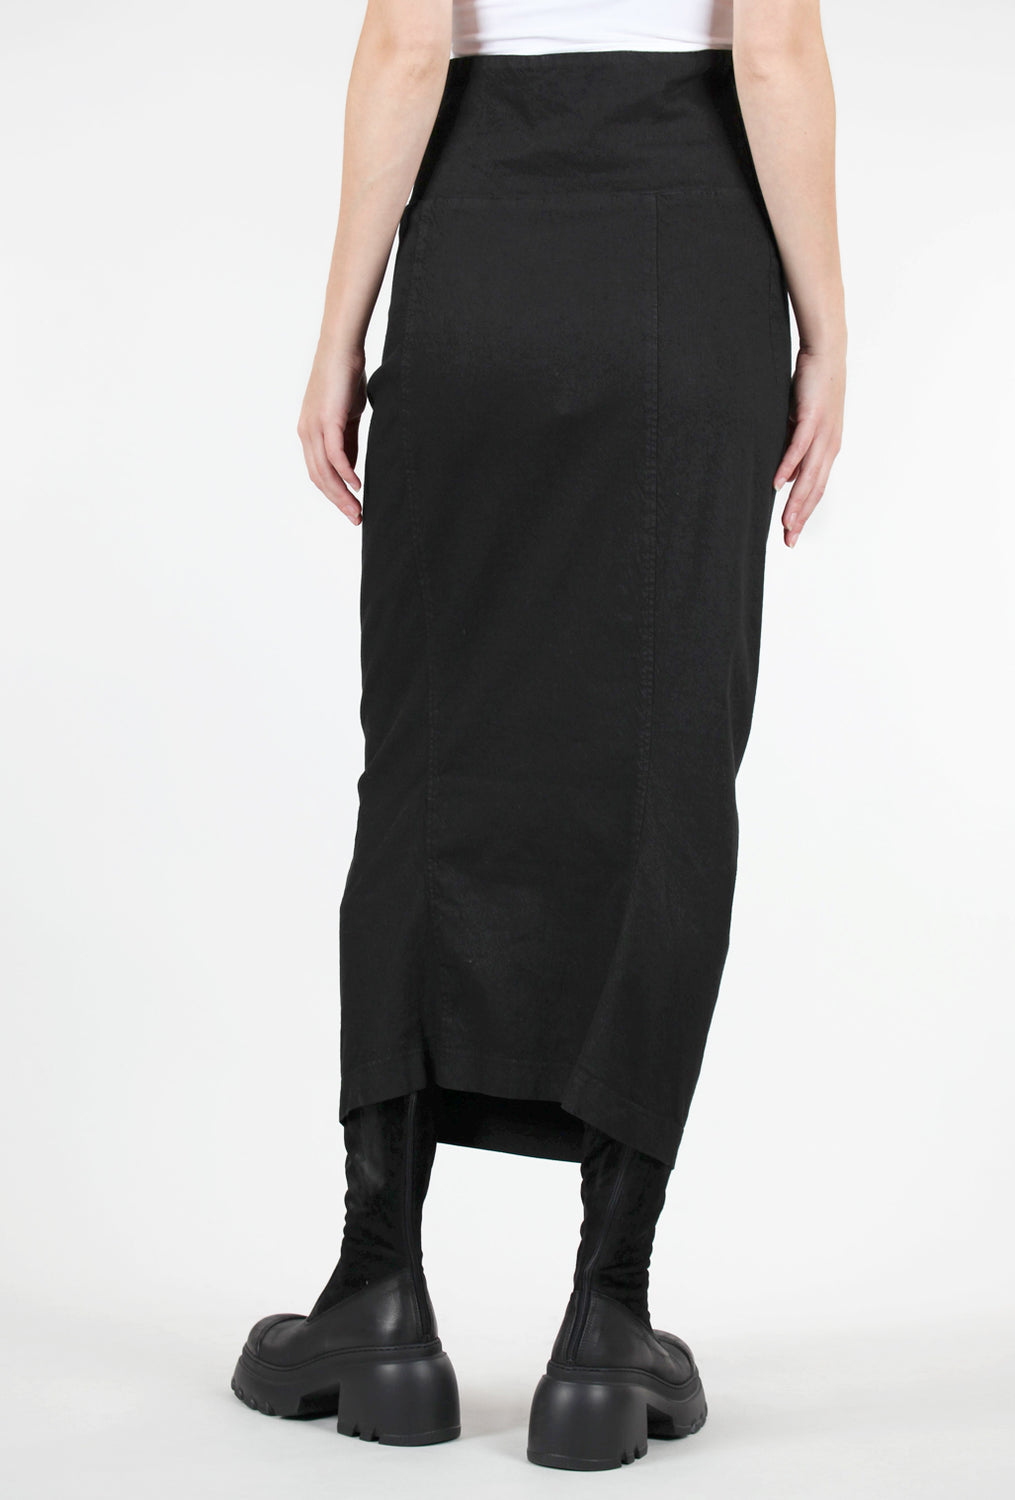 Rundholz Texture Twill Roll Waist Skirt, Black 